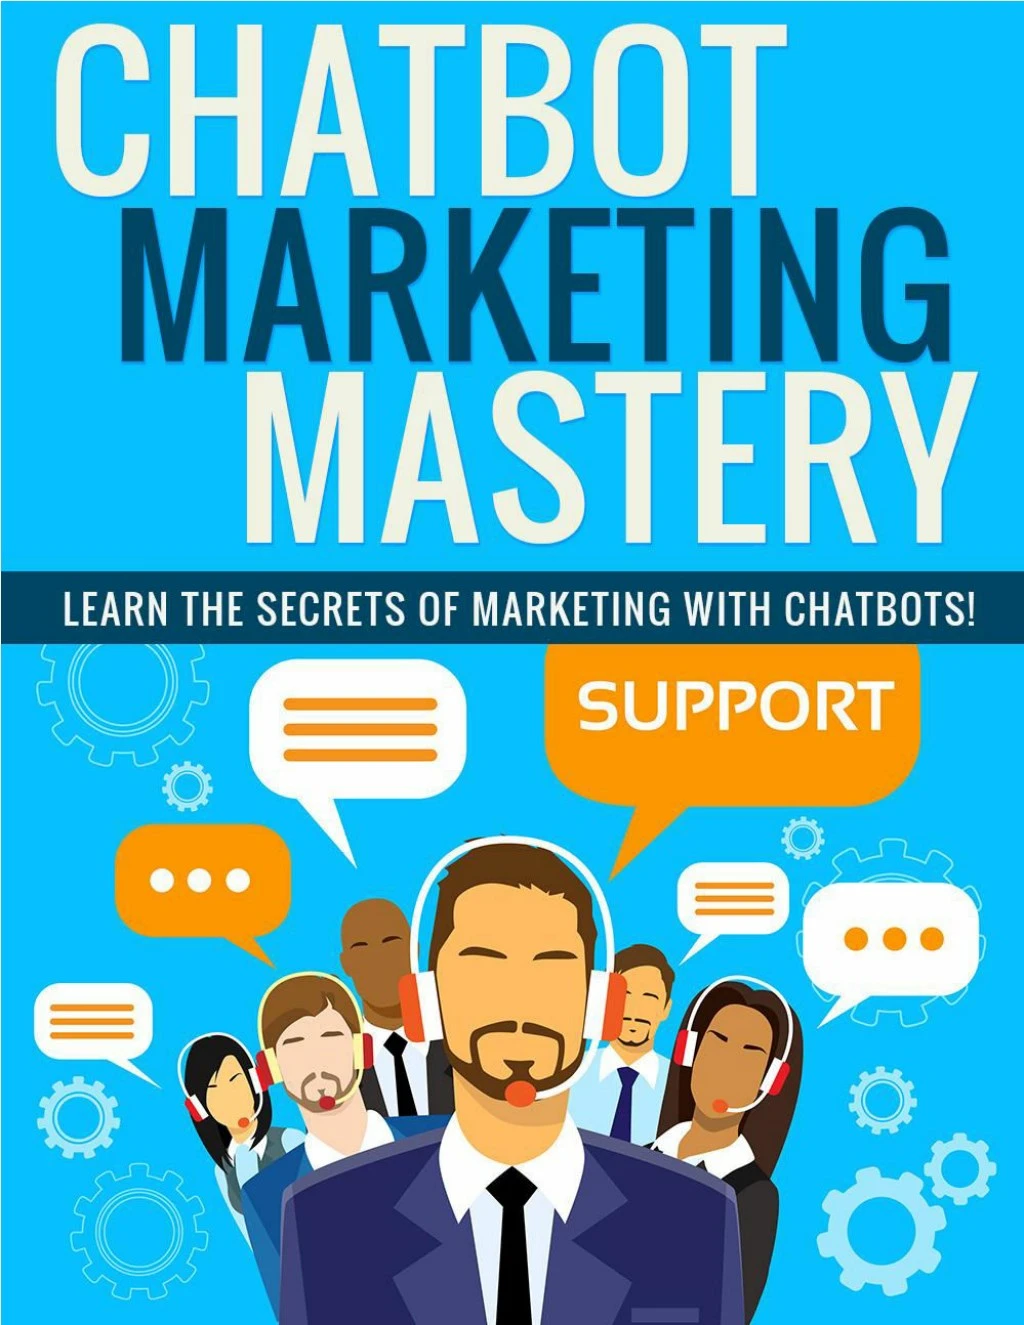 chatbot marketing mastery